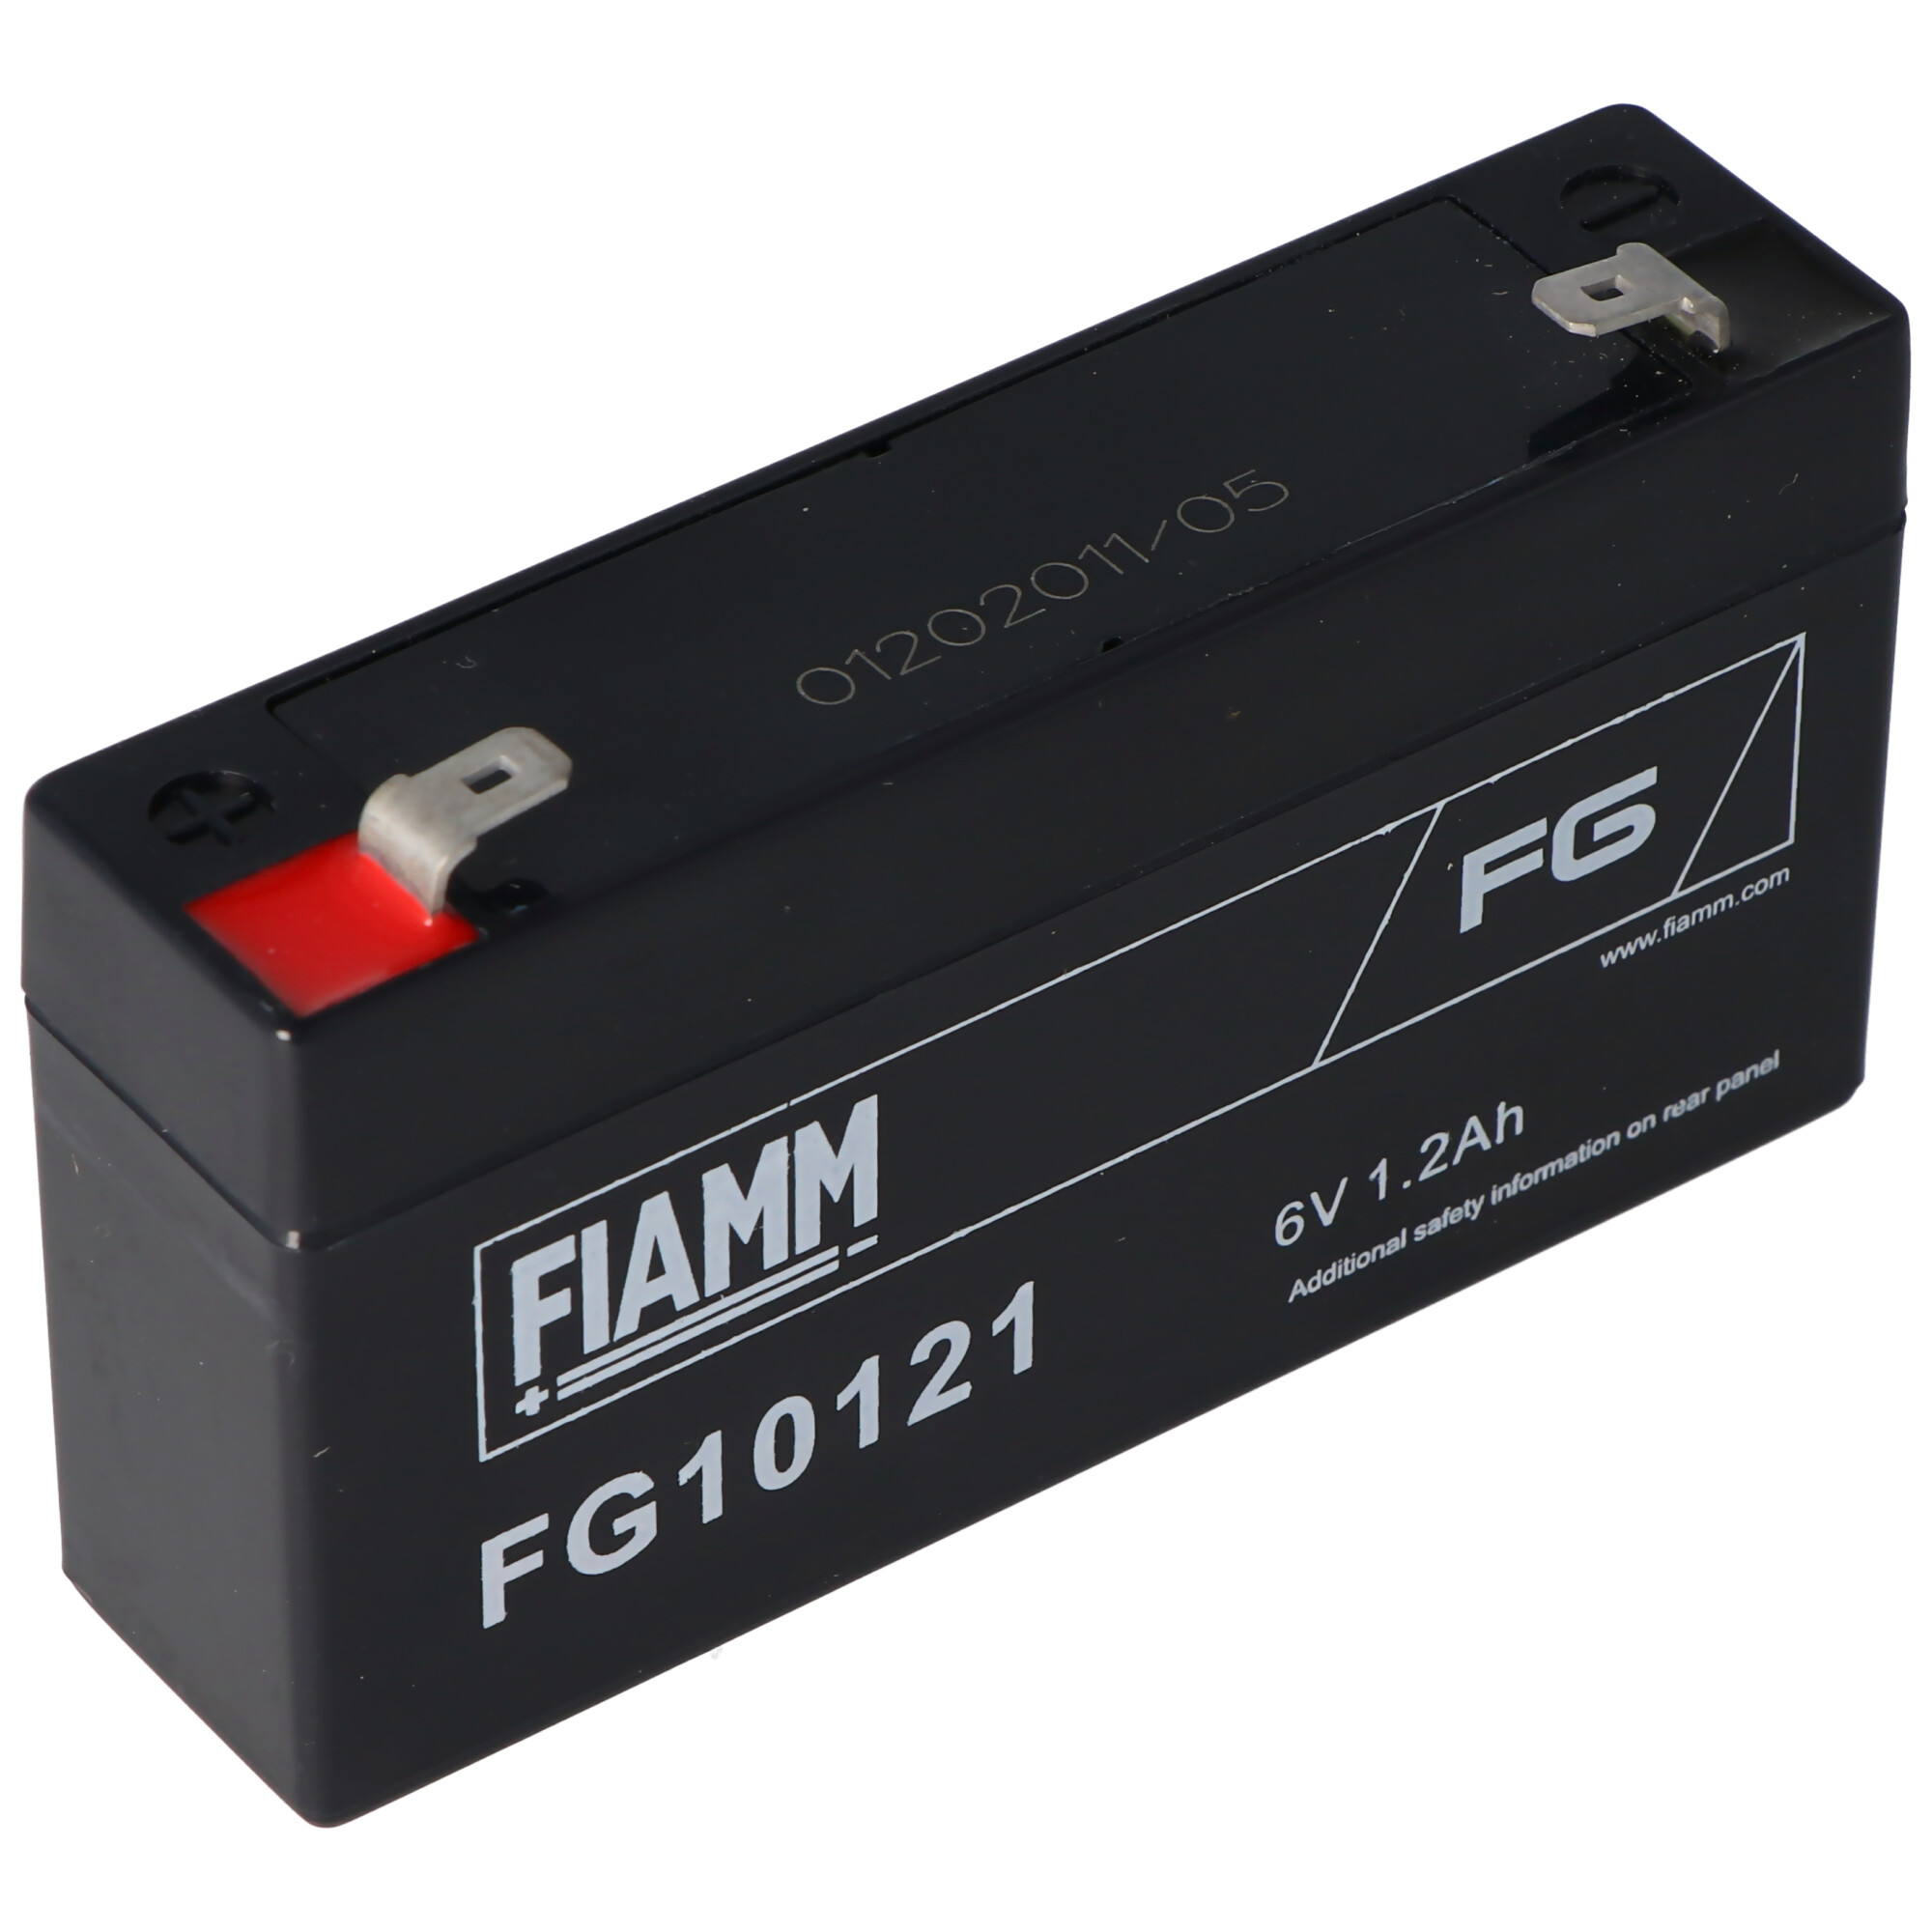 FIAMM Fiamm FG10121 6 Volt, Steckkontakten mit - Blei Faston Pb Akku 1,2Ah 1200 mAh Bleiakku, 2 Blei-Gel